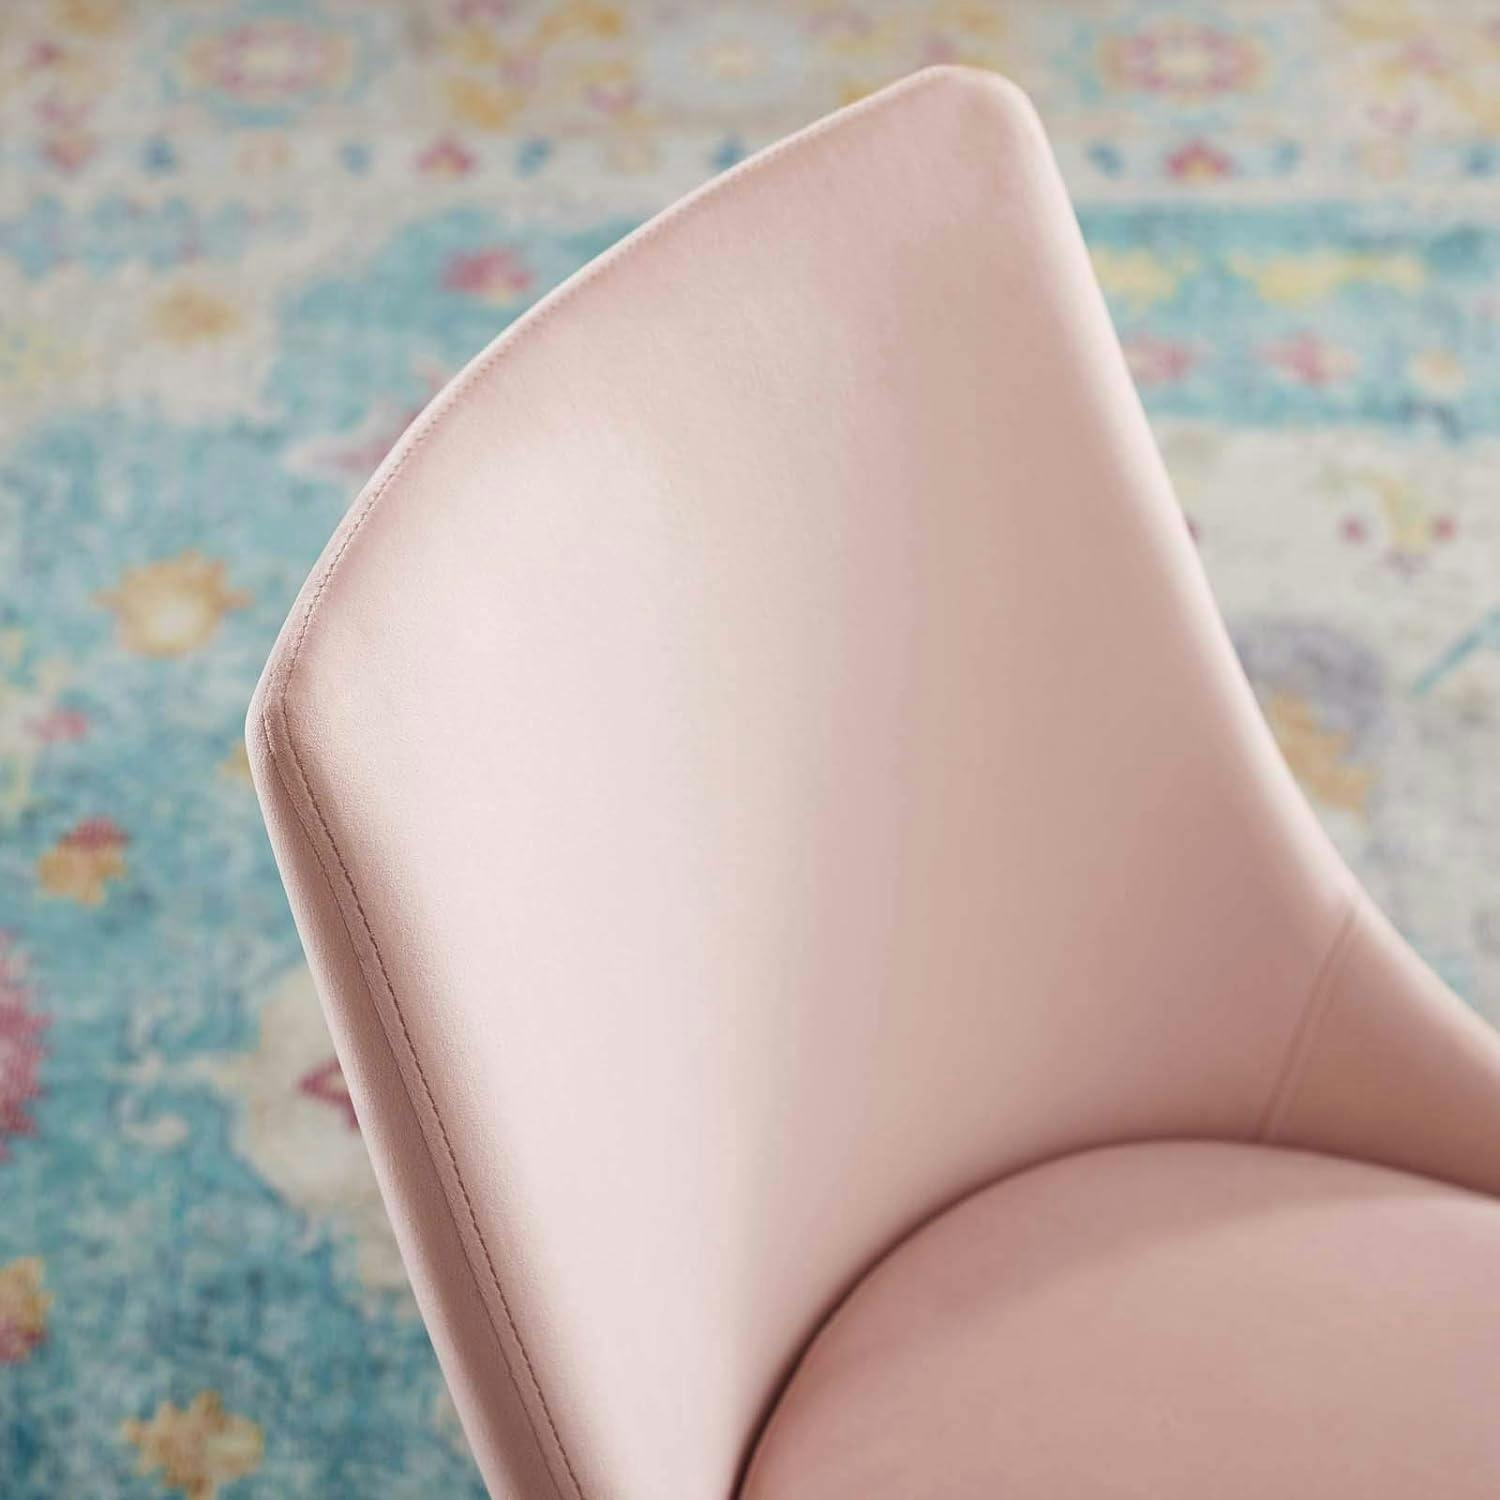 Isle Pink Velvet Upholstered Swivel Side Chair with Gold Metal Legs